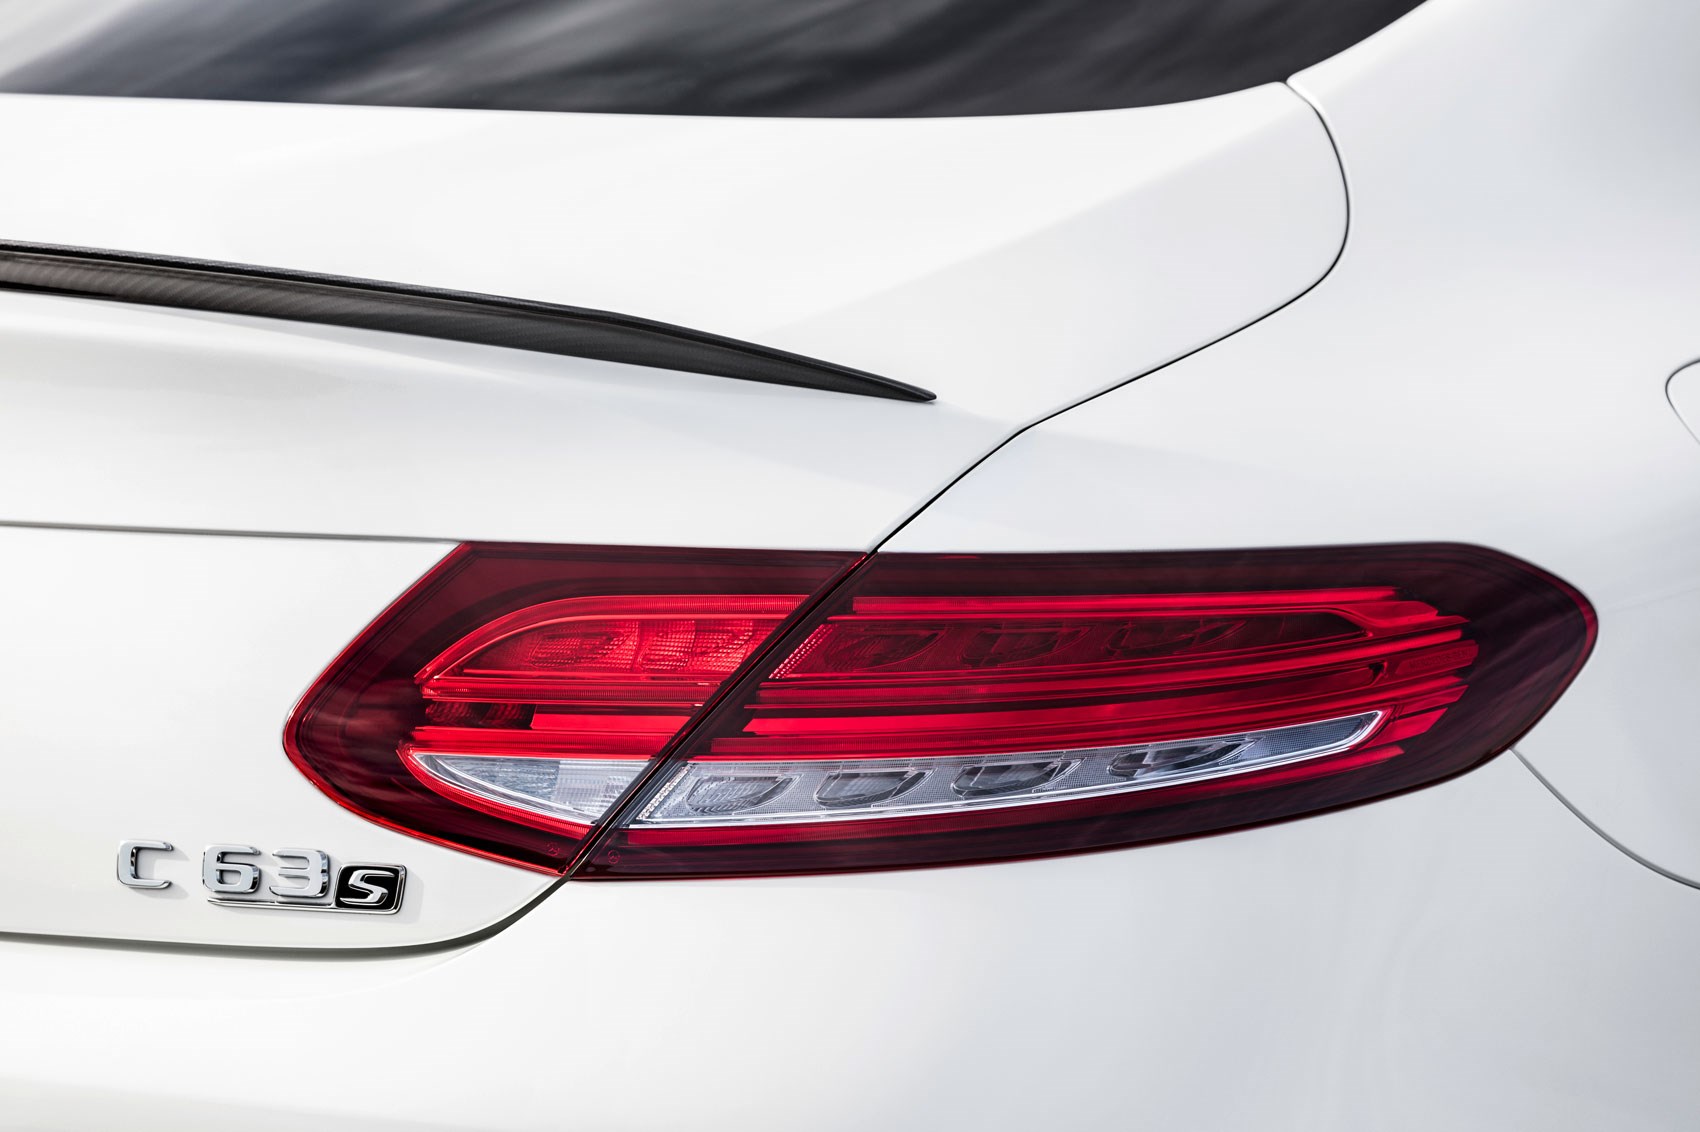 Mercedes Amg C63 And Amg C63 S Uk Prices For Facelift Revealed Car Magazine